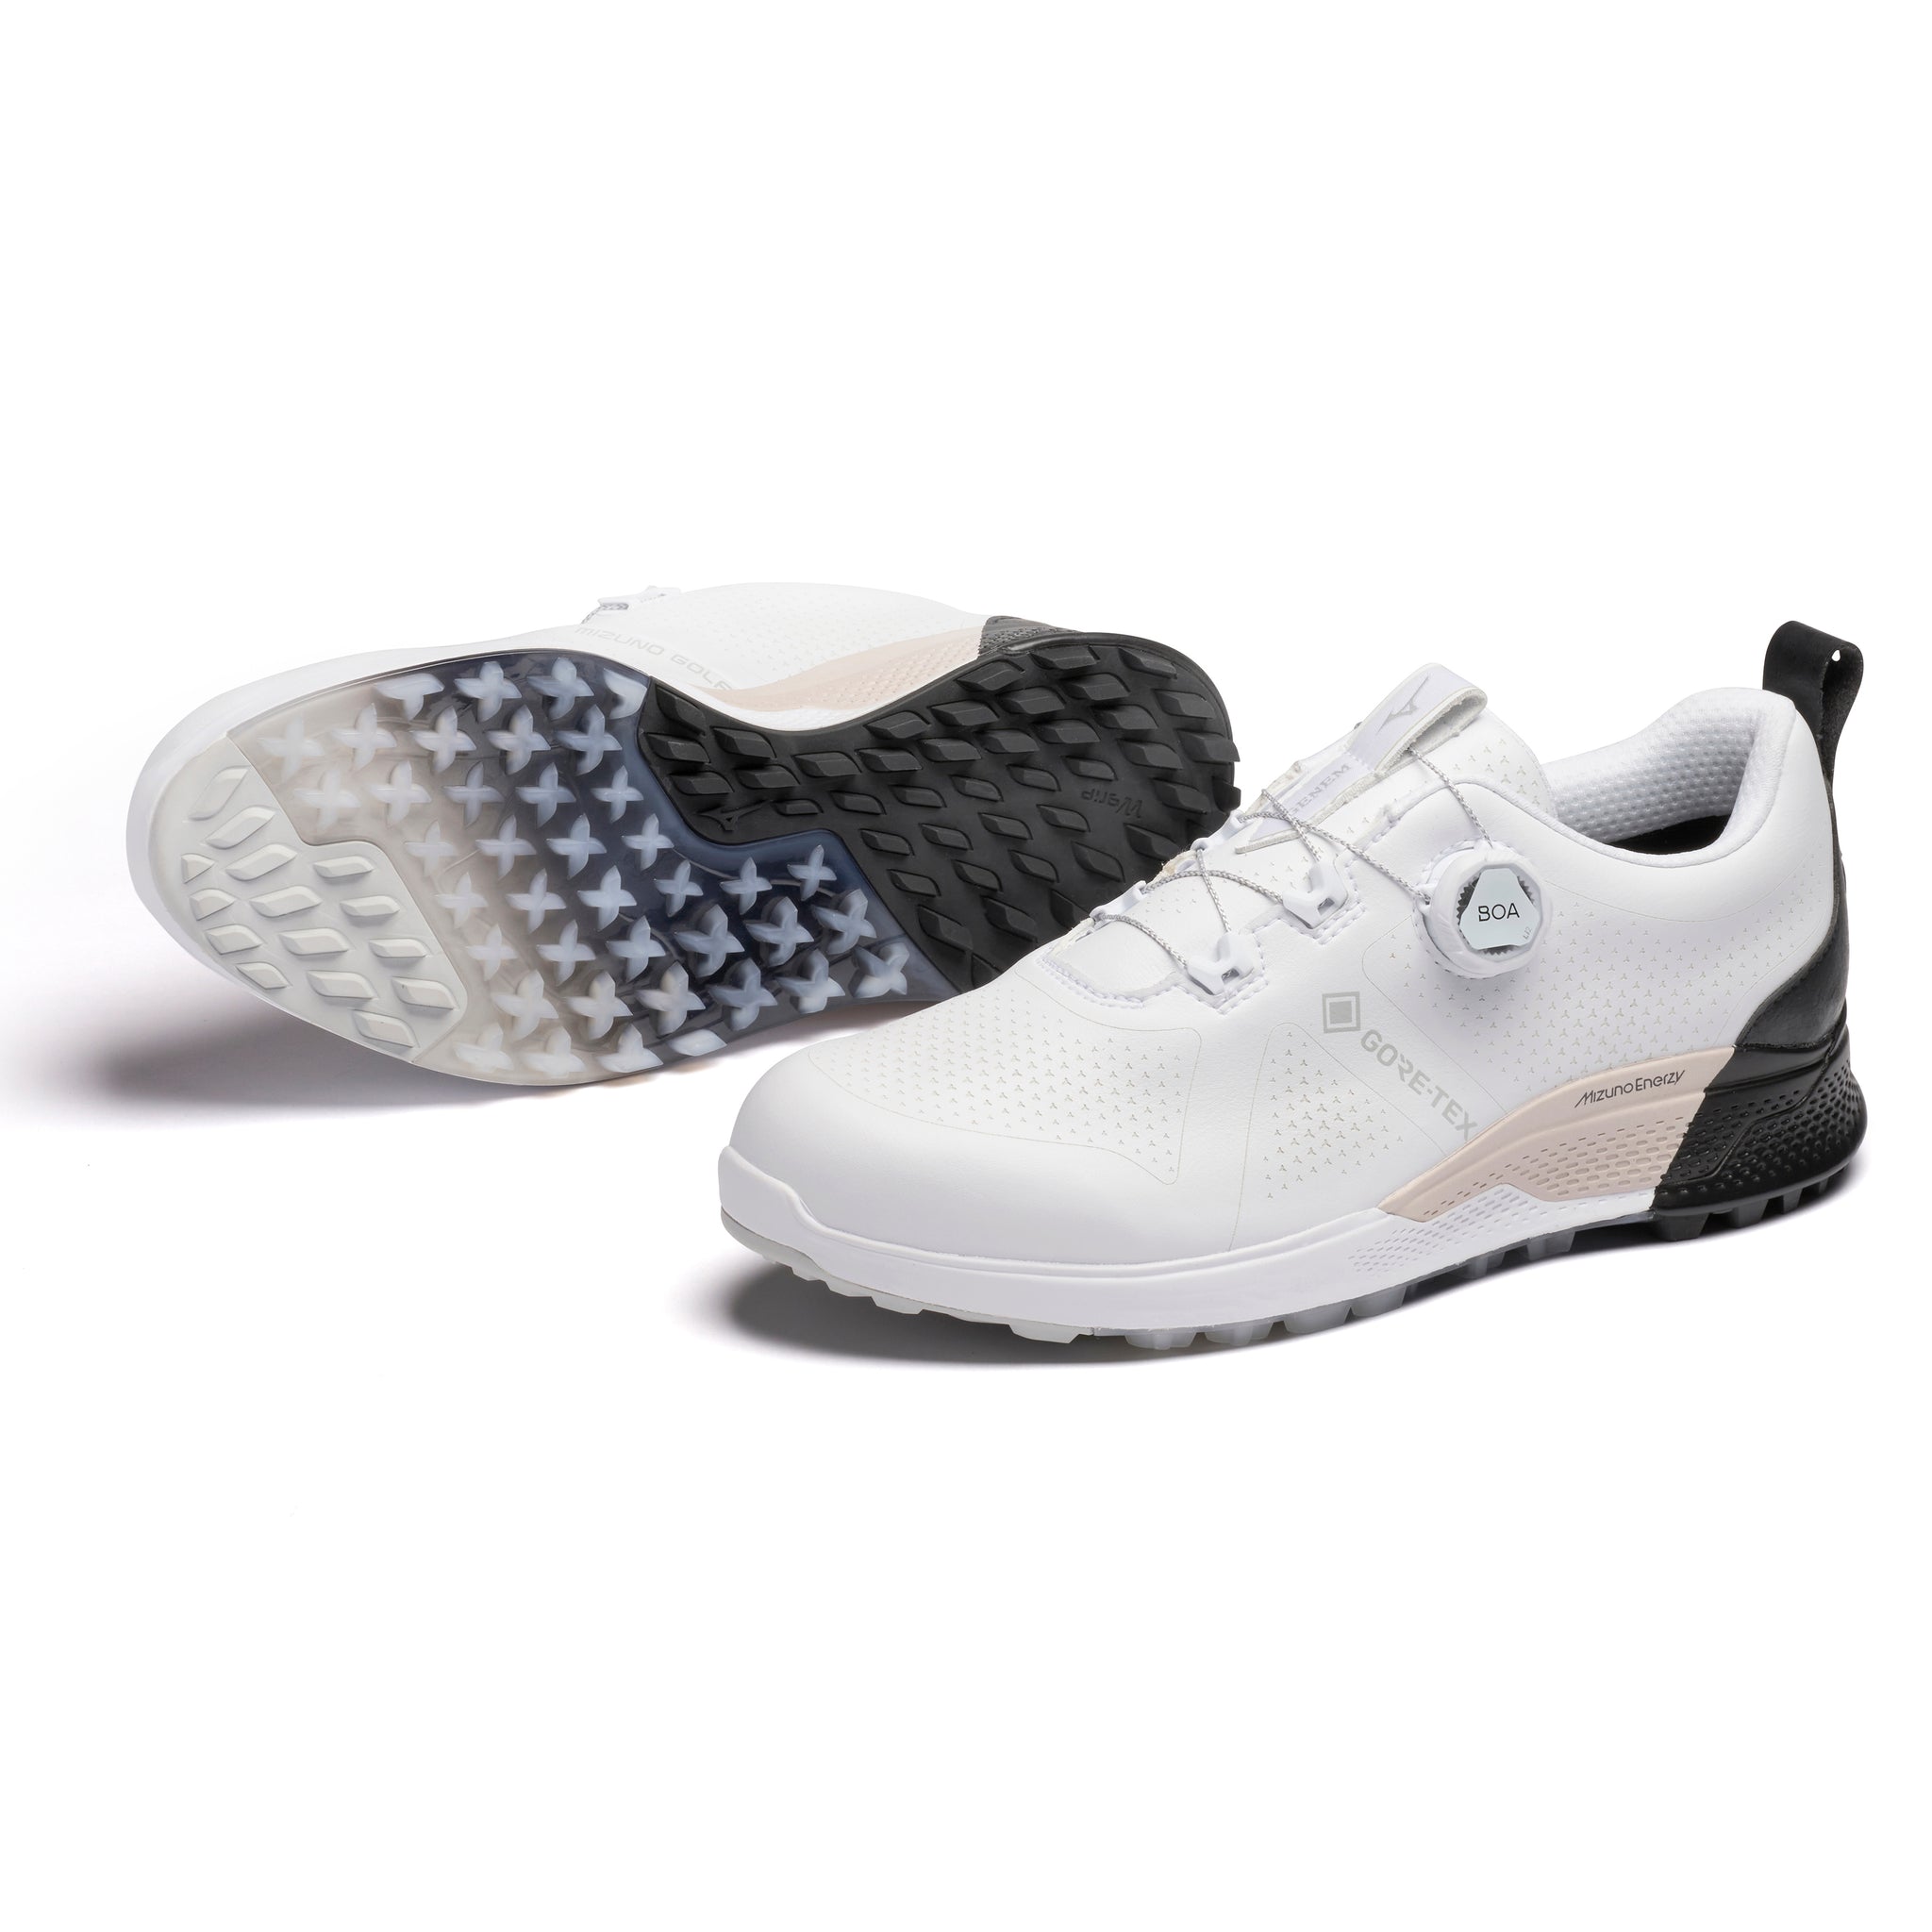 mizuno-genem-wg-gtx-boa-golf-shoes-51gq2300-white-black-91